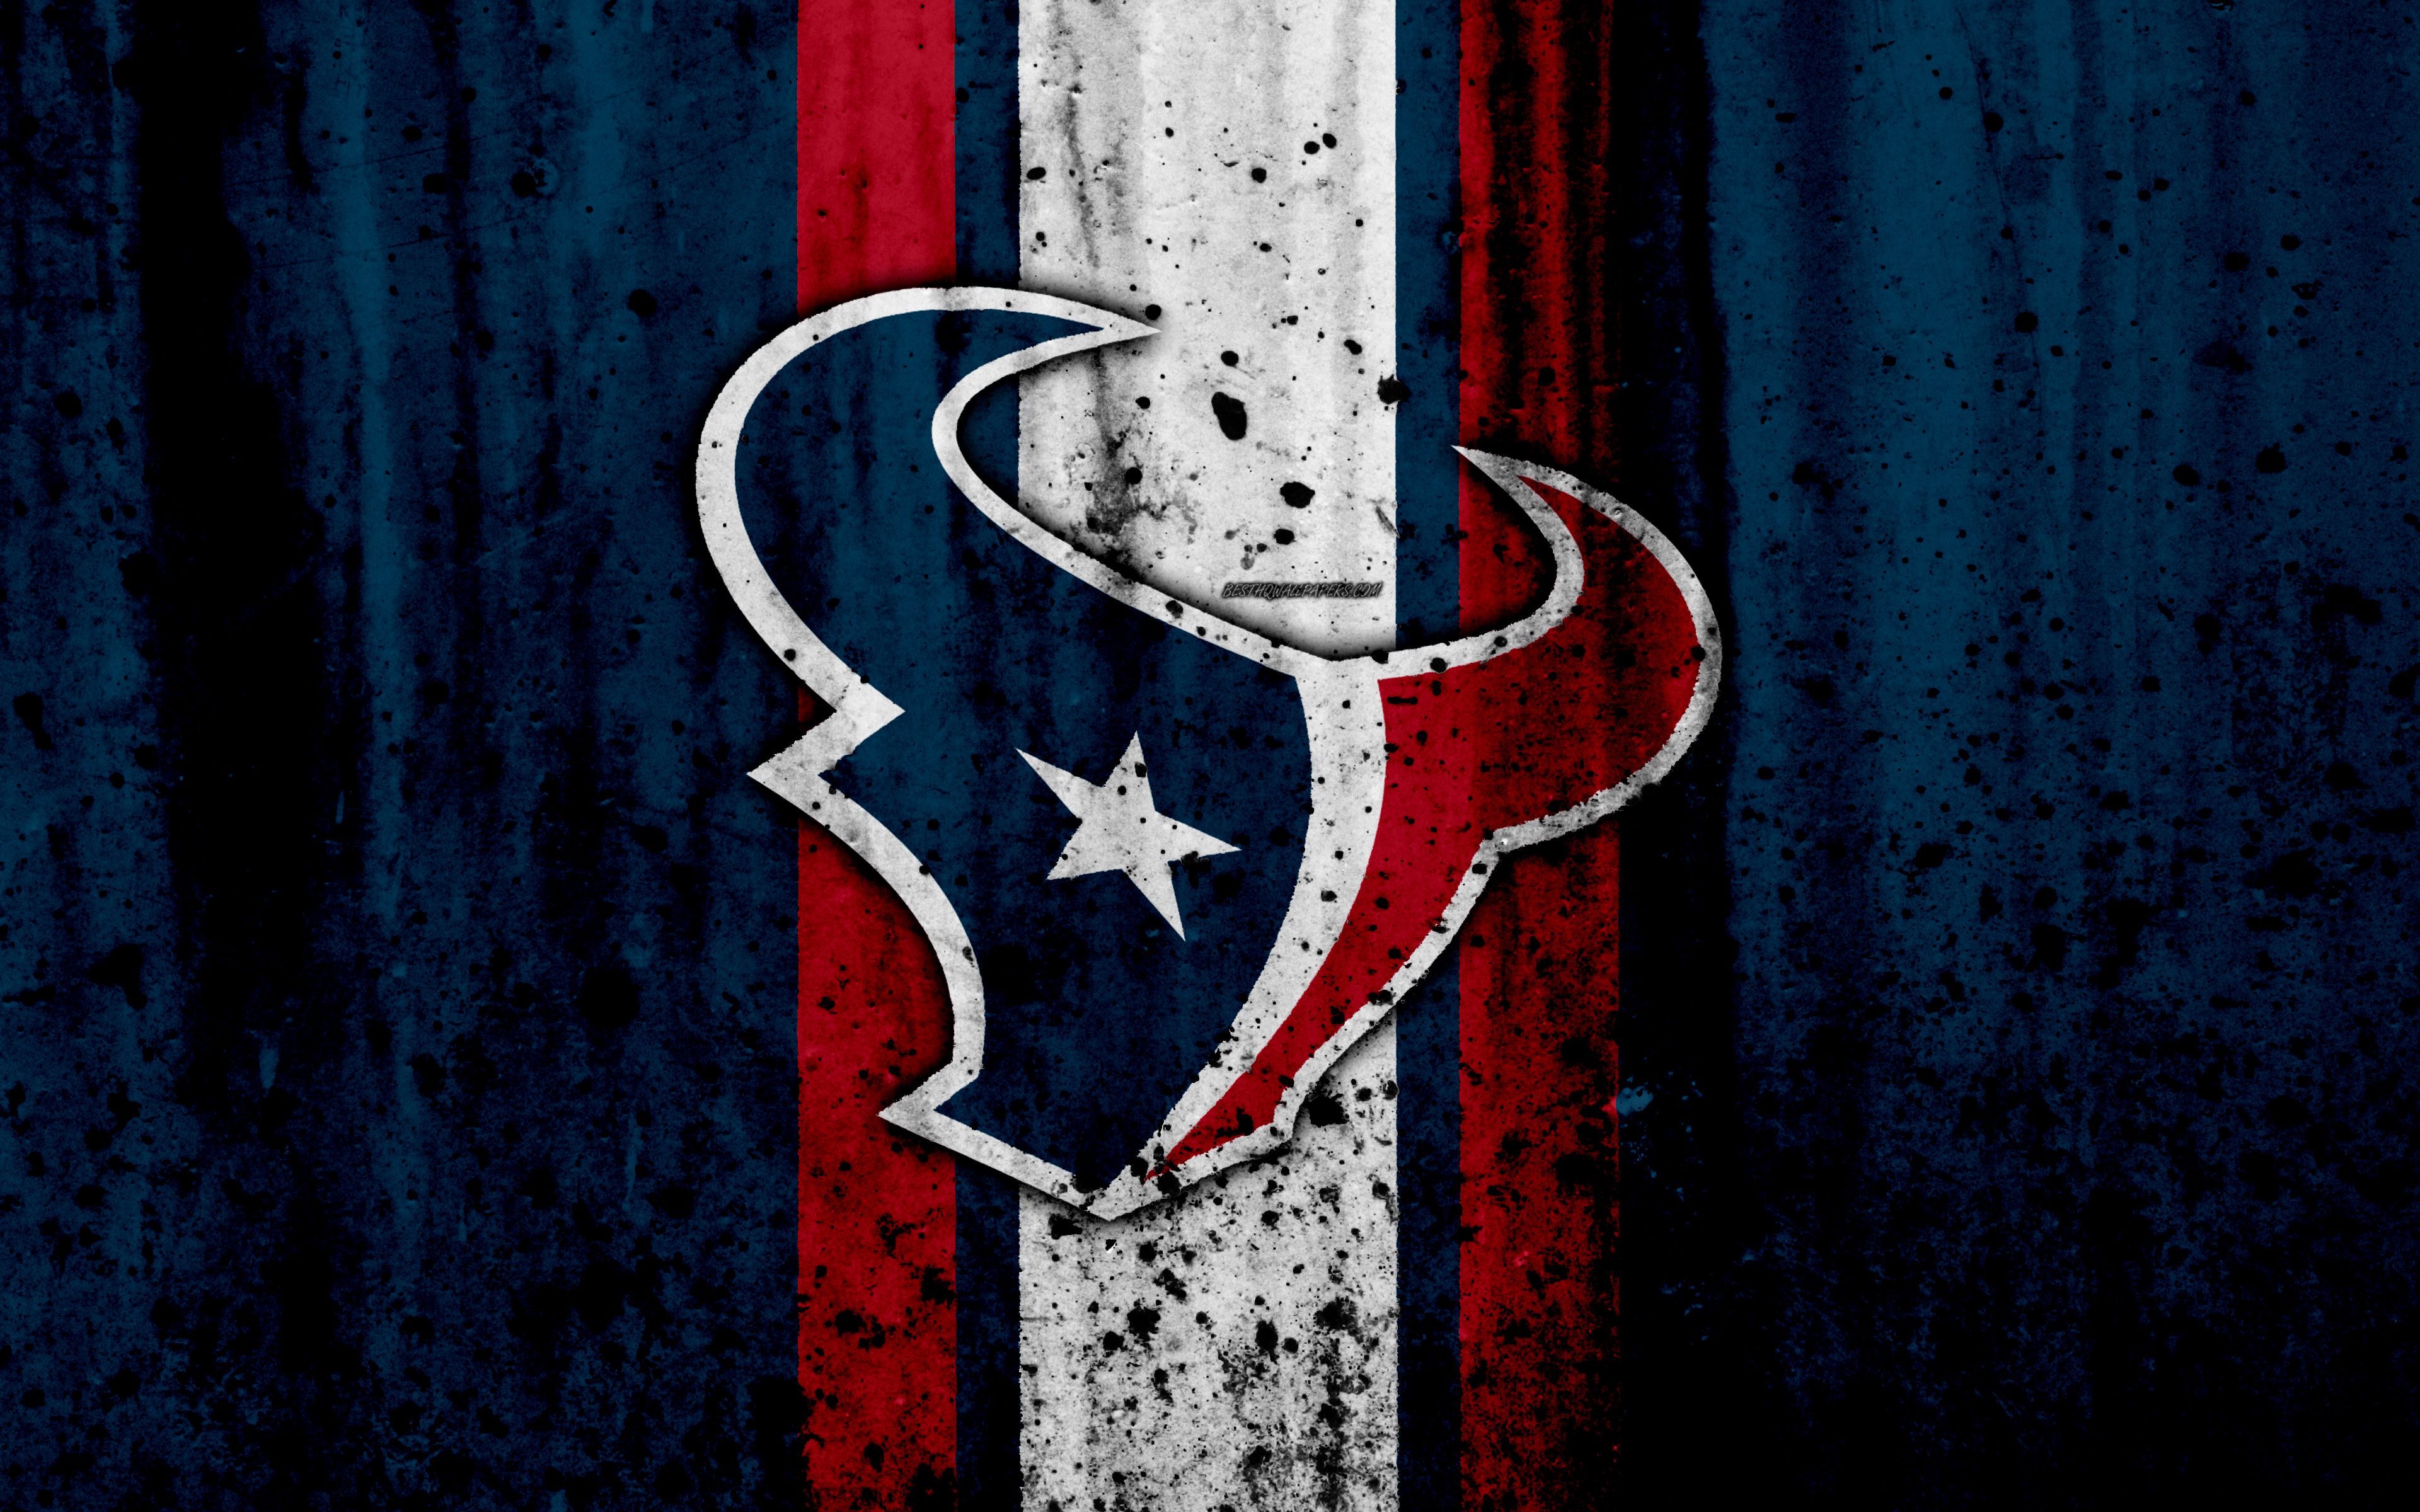 Download wallpaper Houston Texans, 4k, NFL, grunge, stone texture